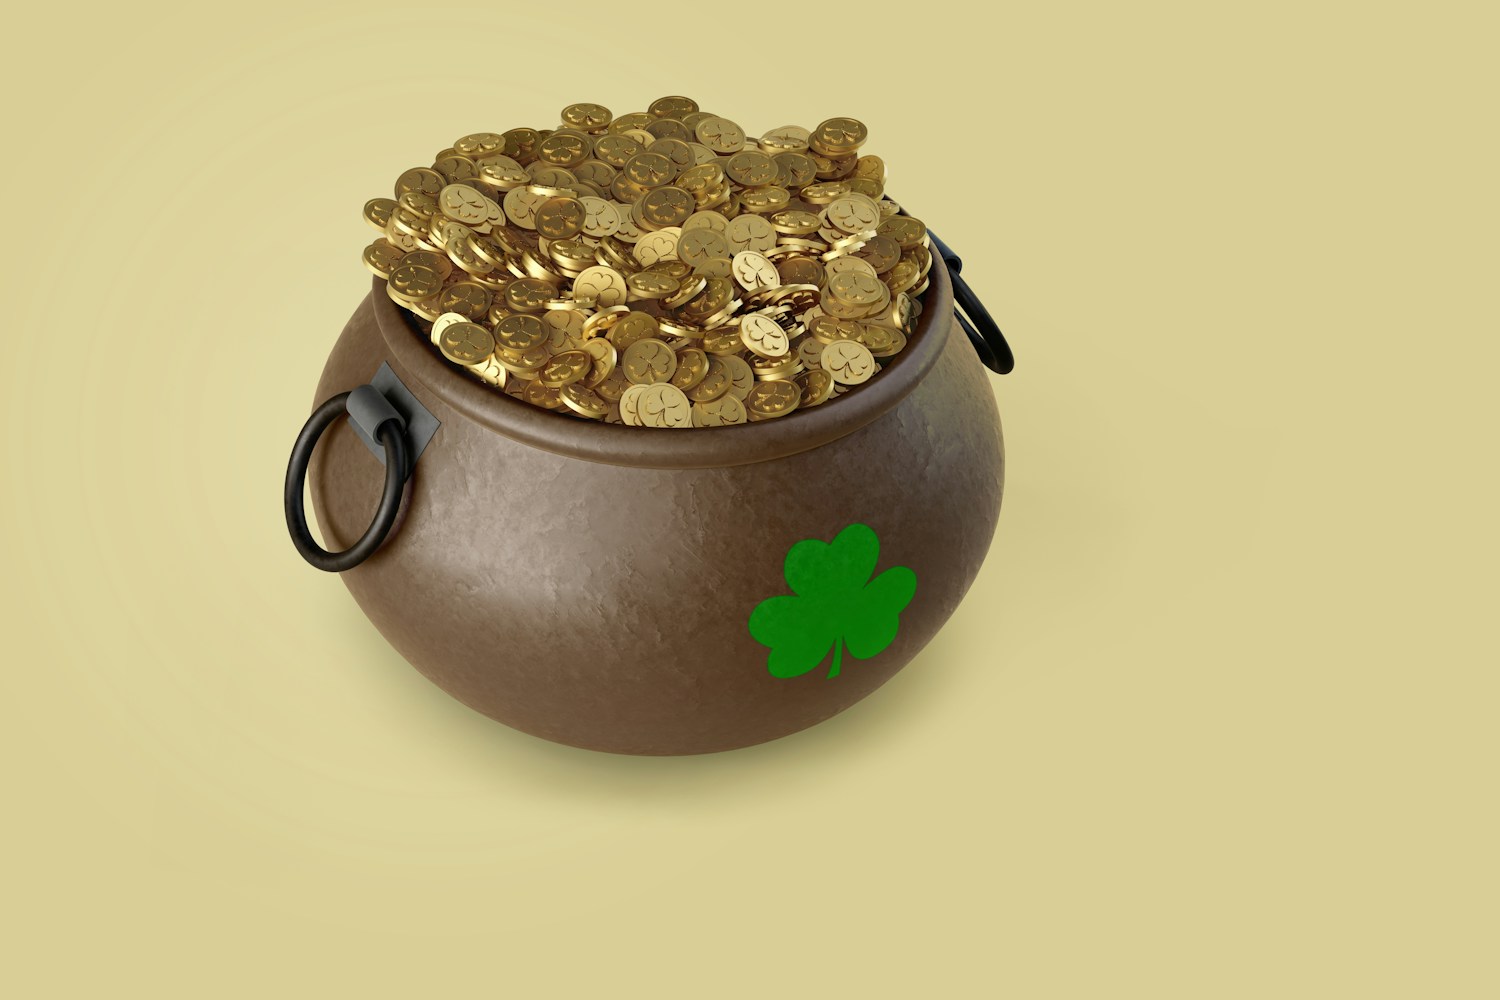 Saint Patrick's day Pot of Gold Mockup, Front View 03